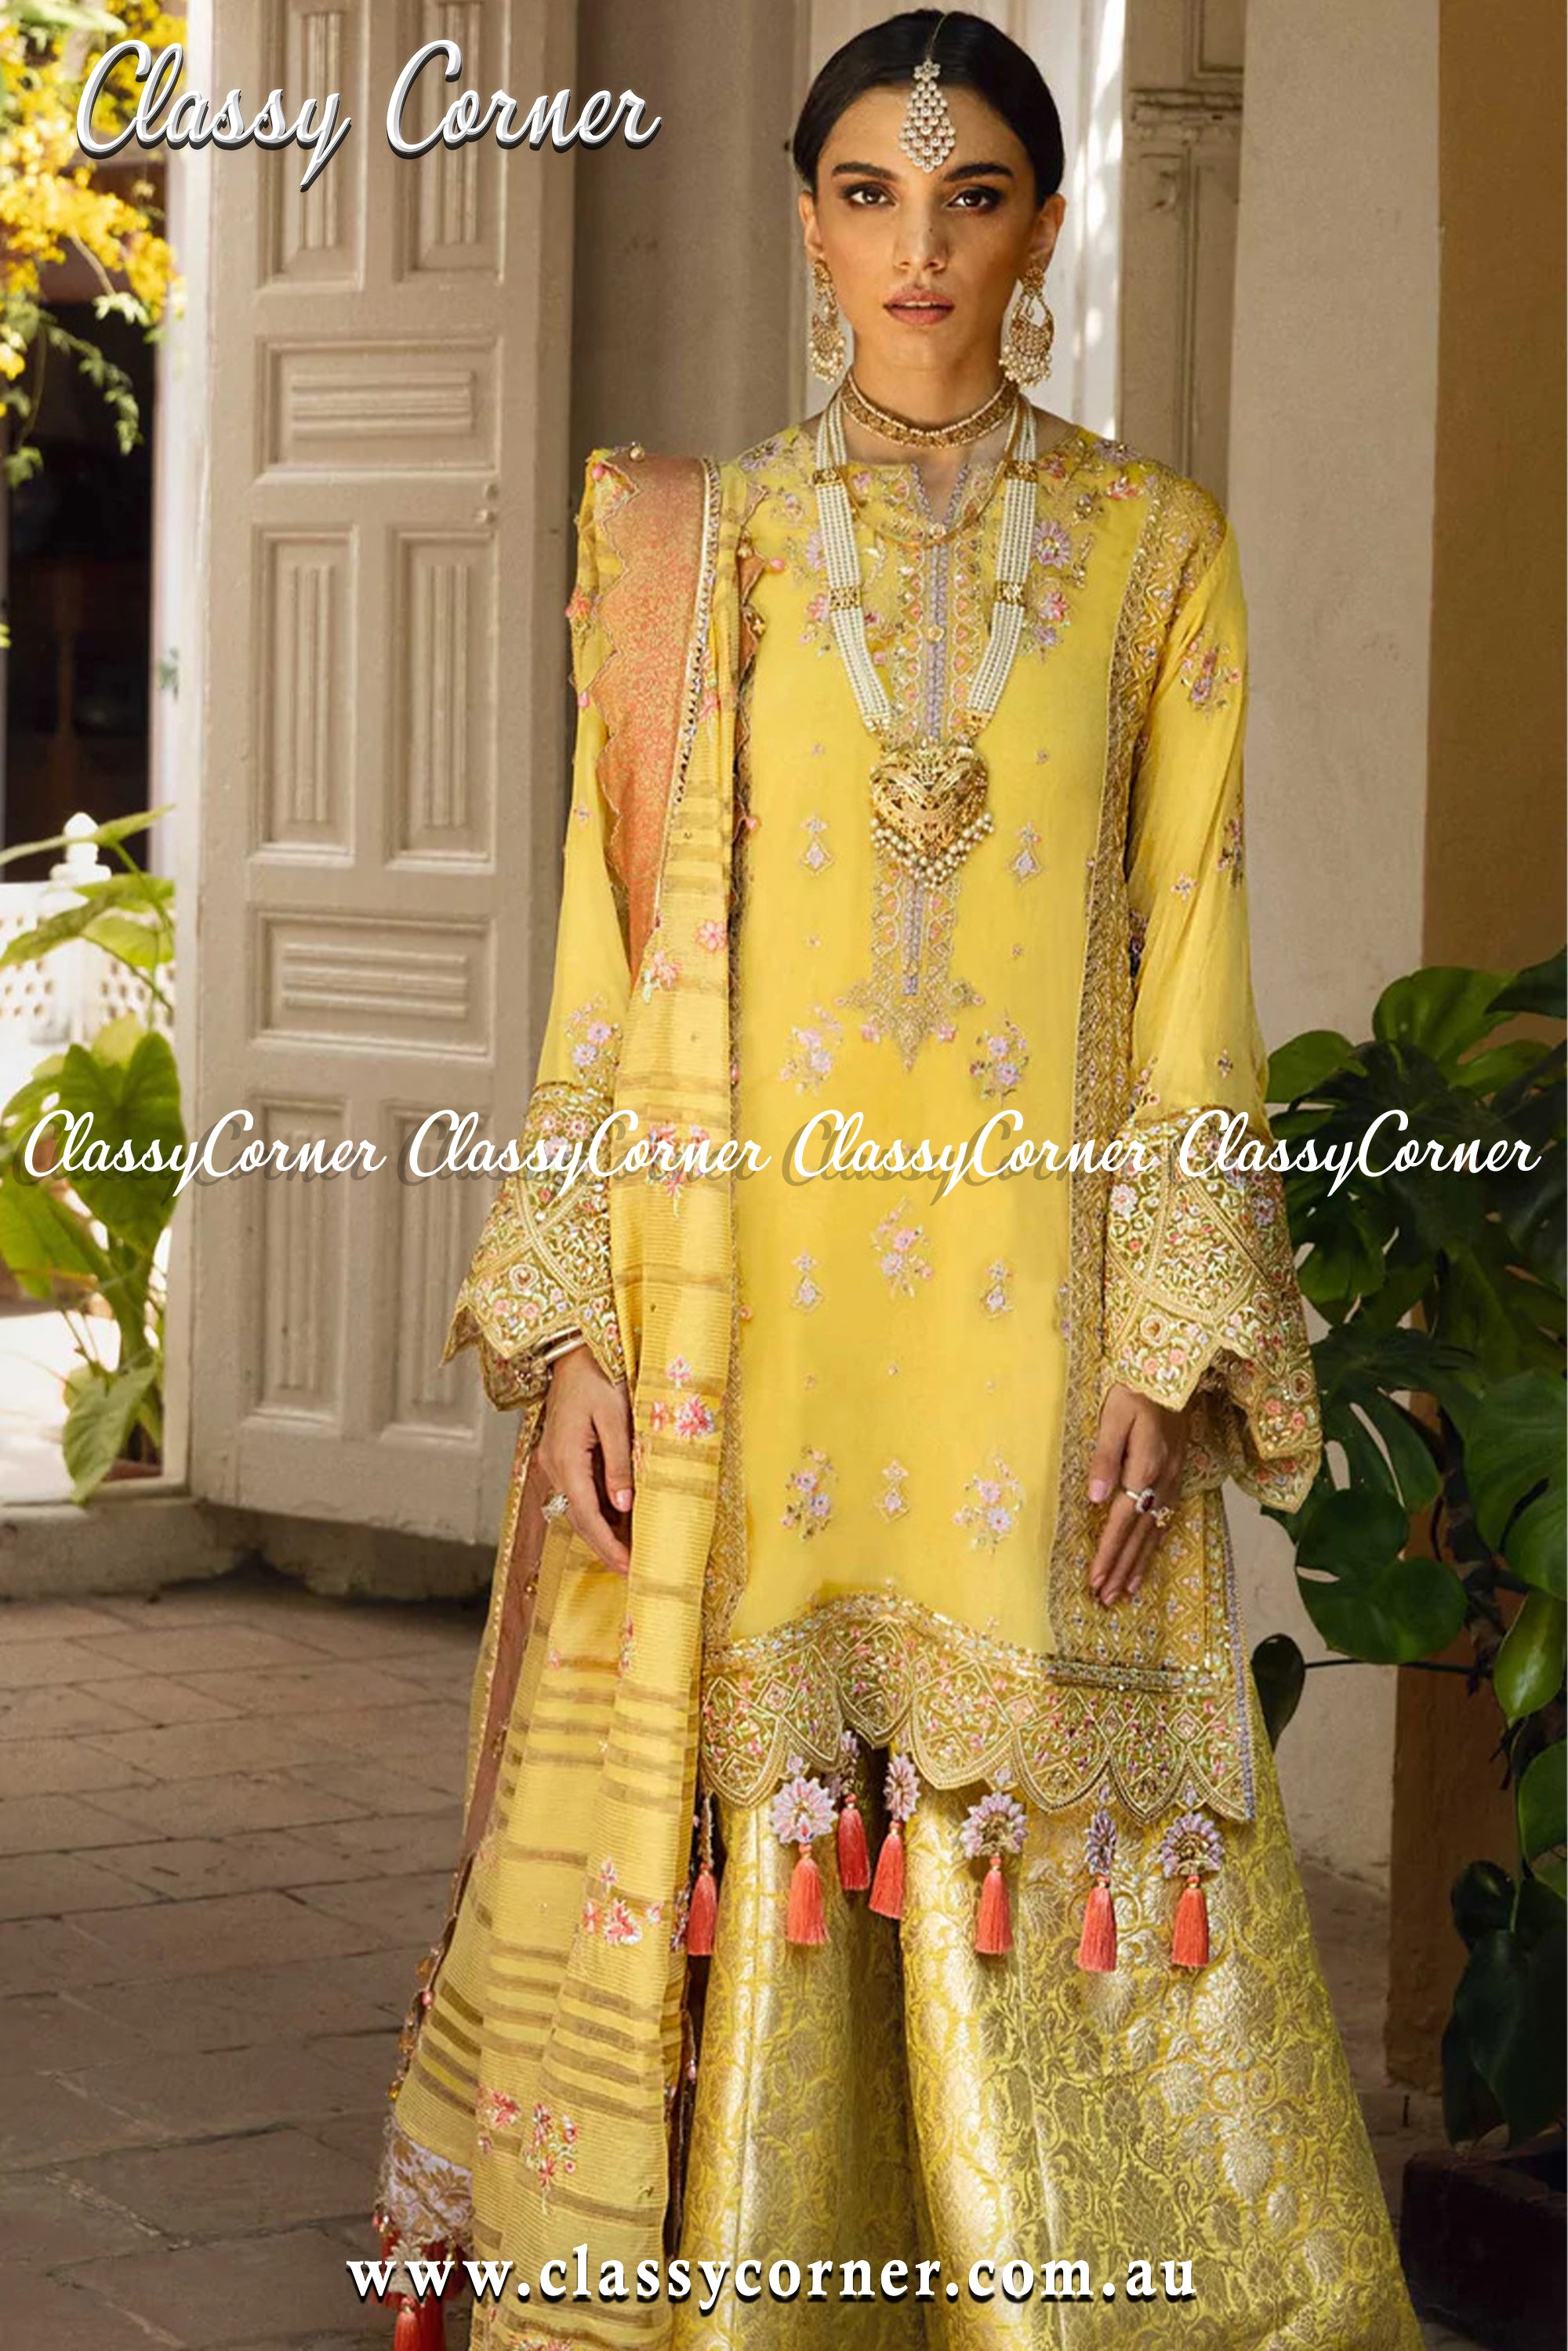 Golden Yellow Chiffon Sharara Outfit - Classy Corner